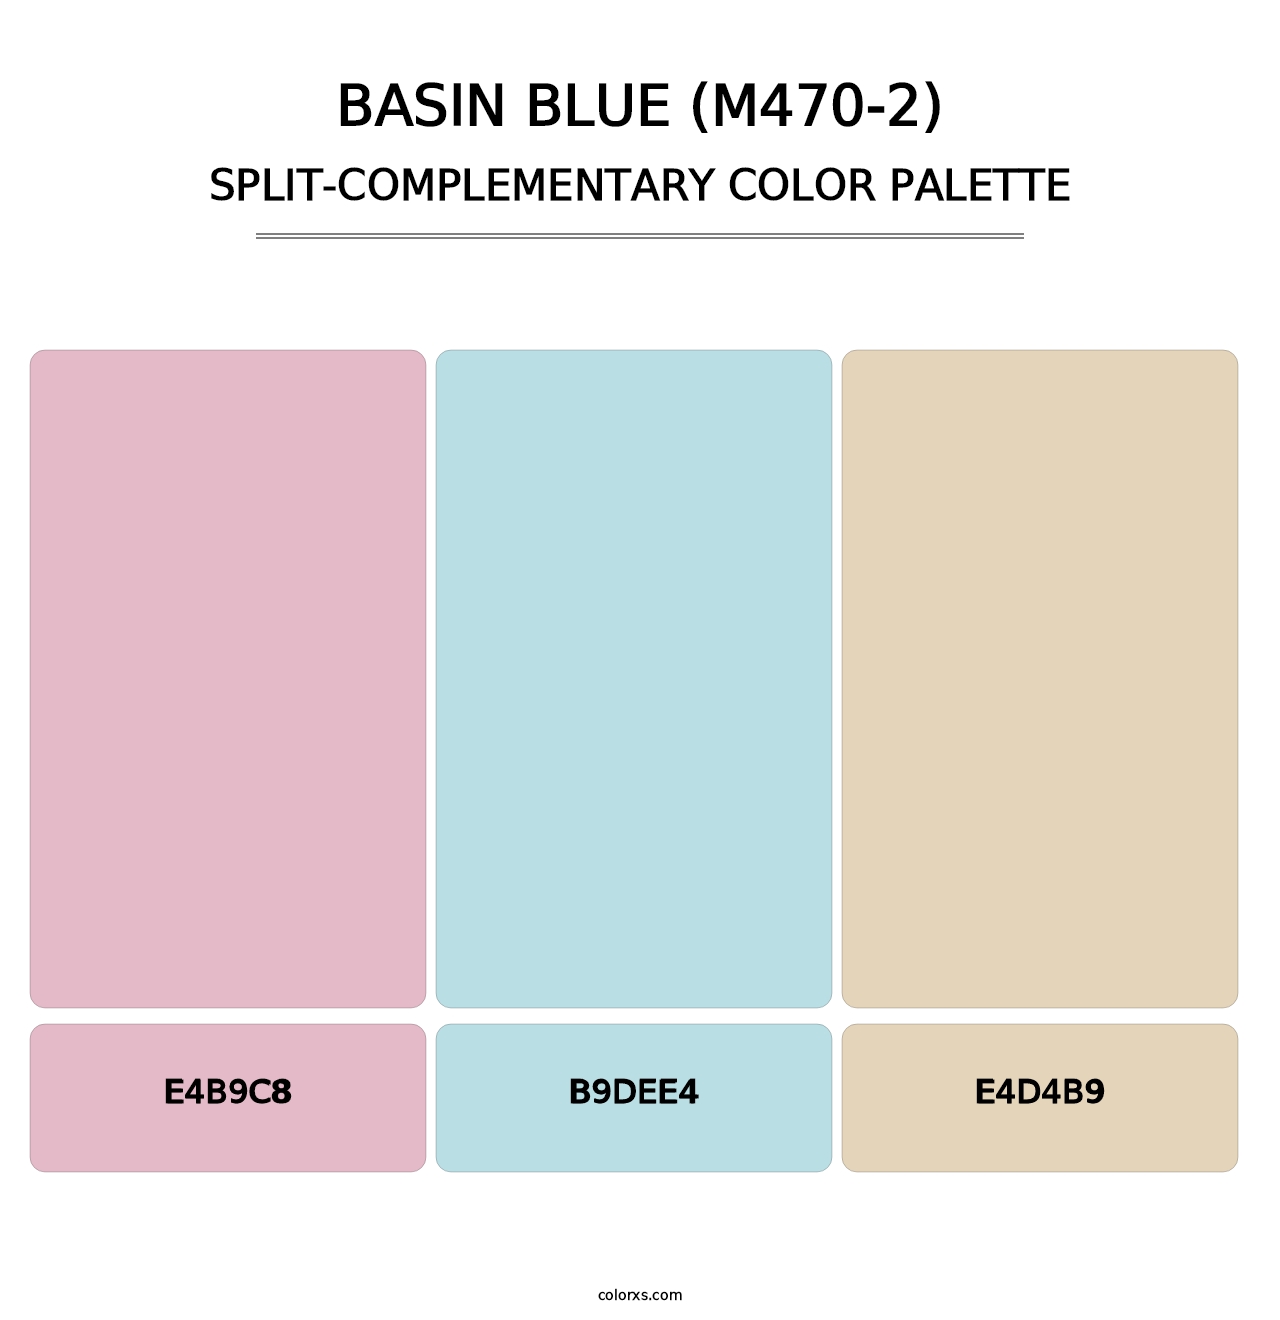 Basin Blue (M470-2) - Split-Complementary Color Palette